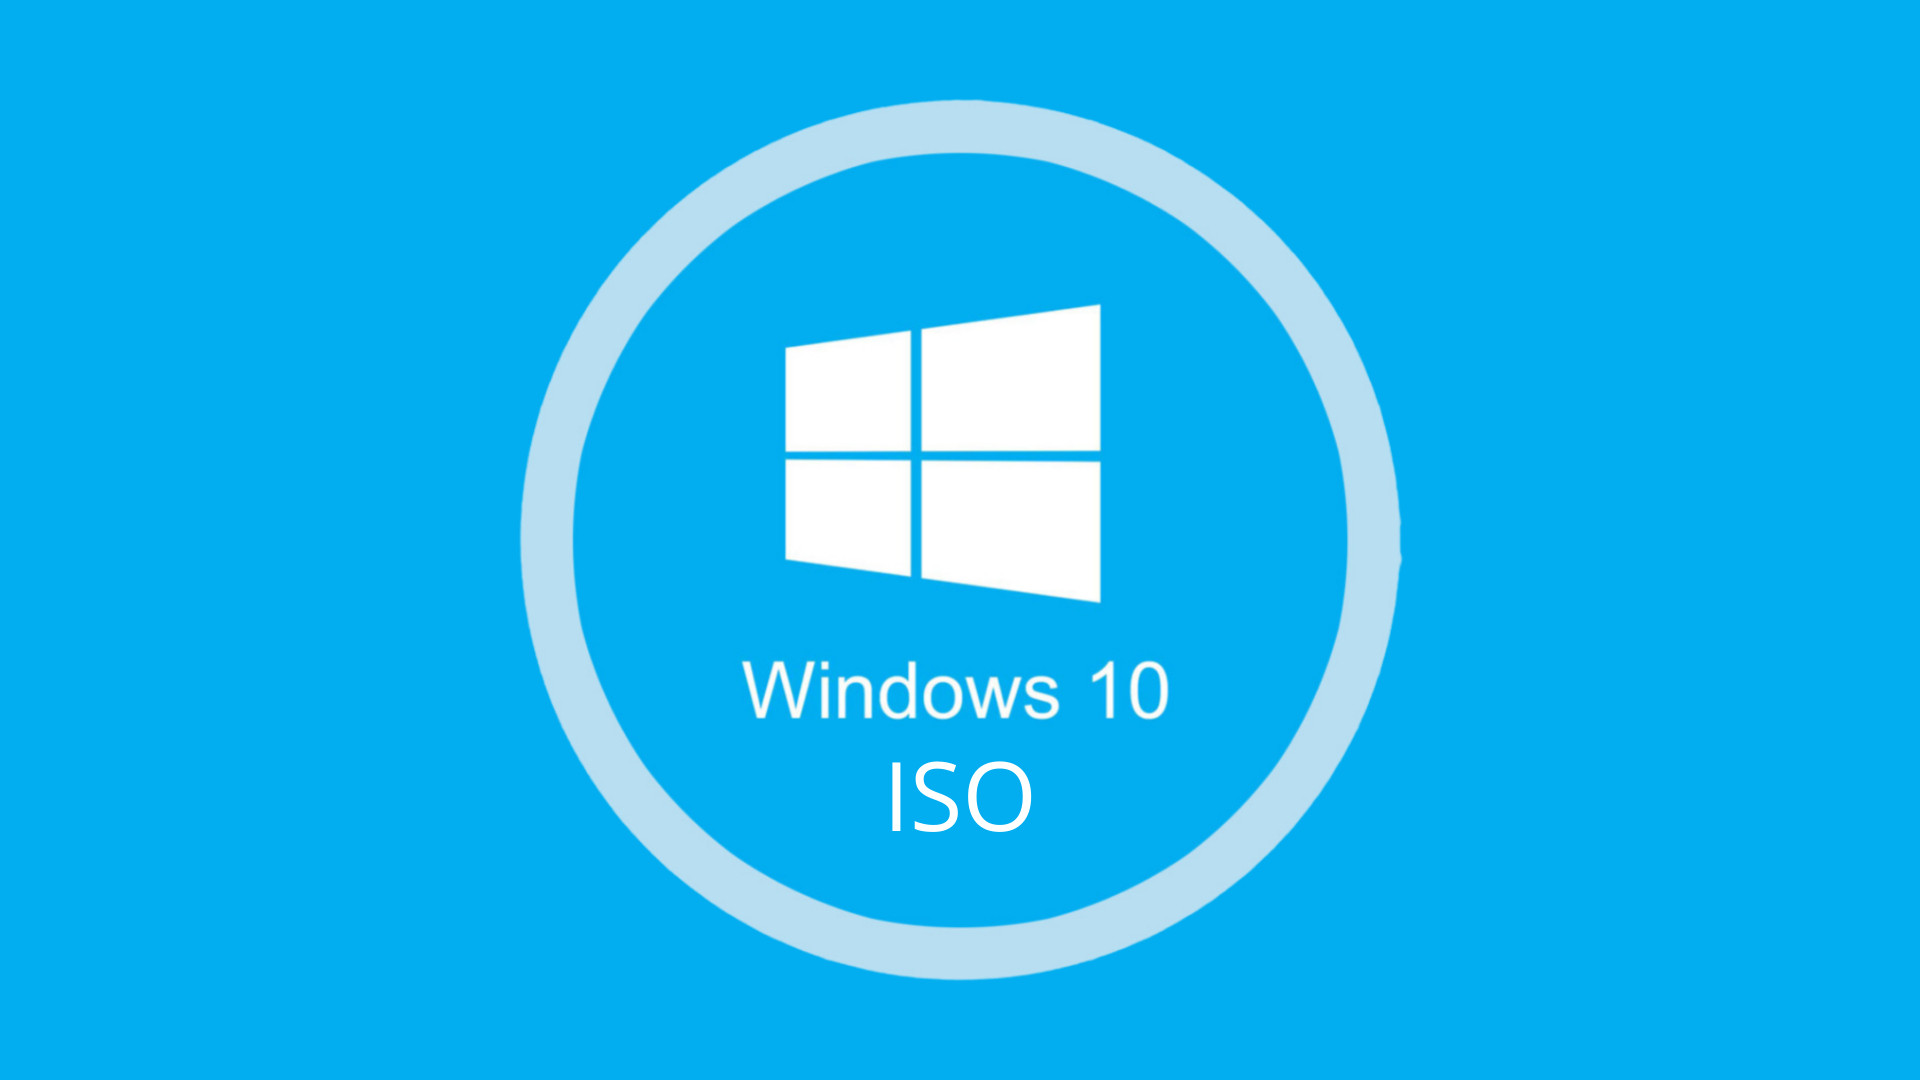 download windows 10 iso image [Latest Major Update] - Crast.net